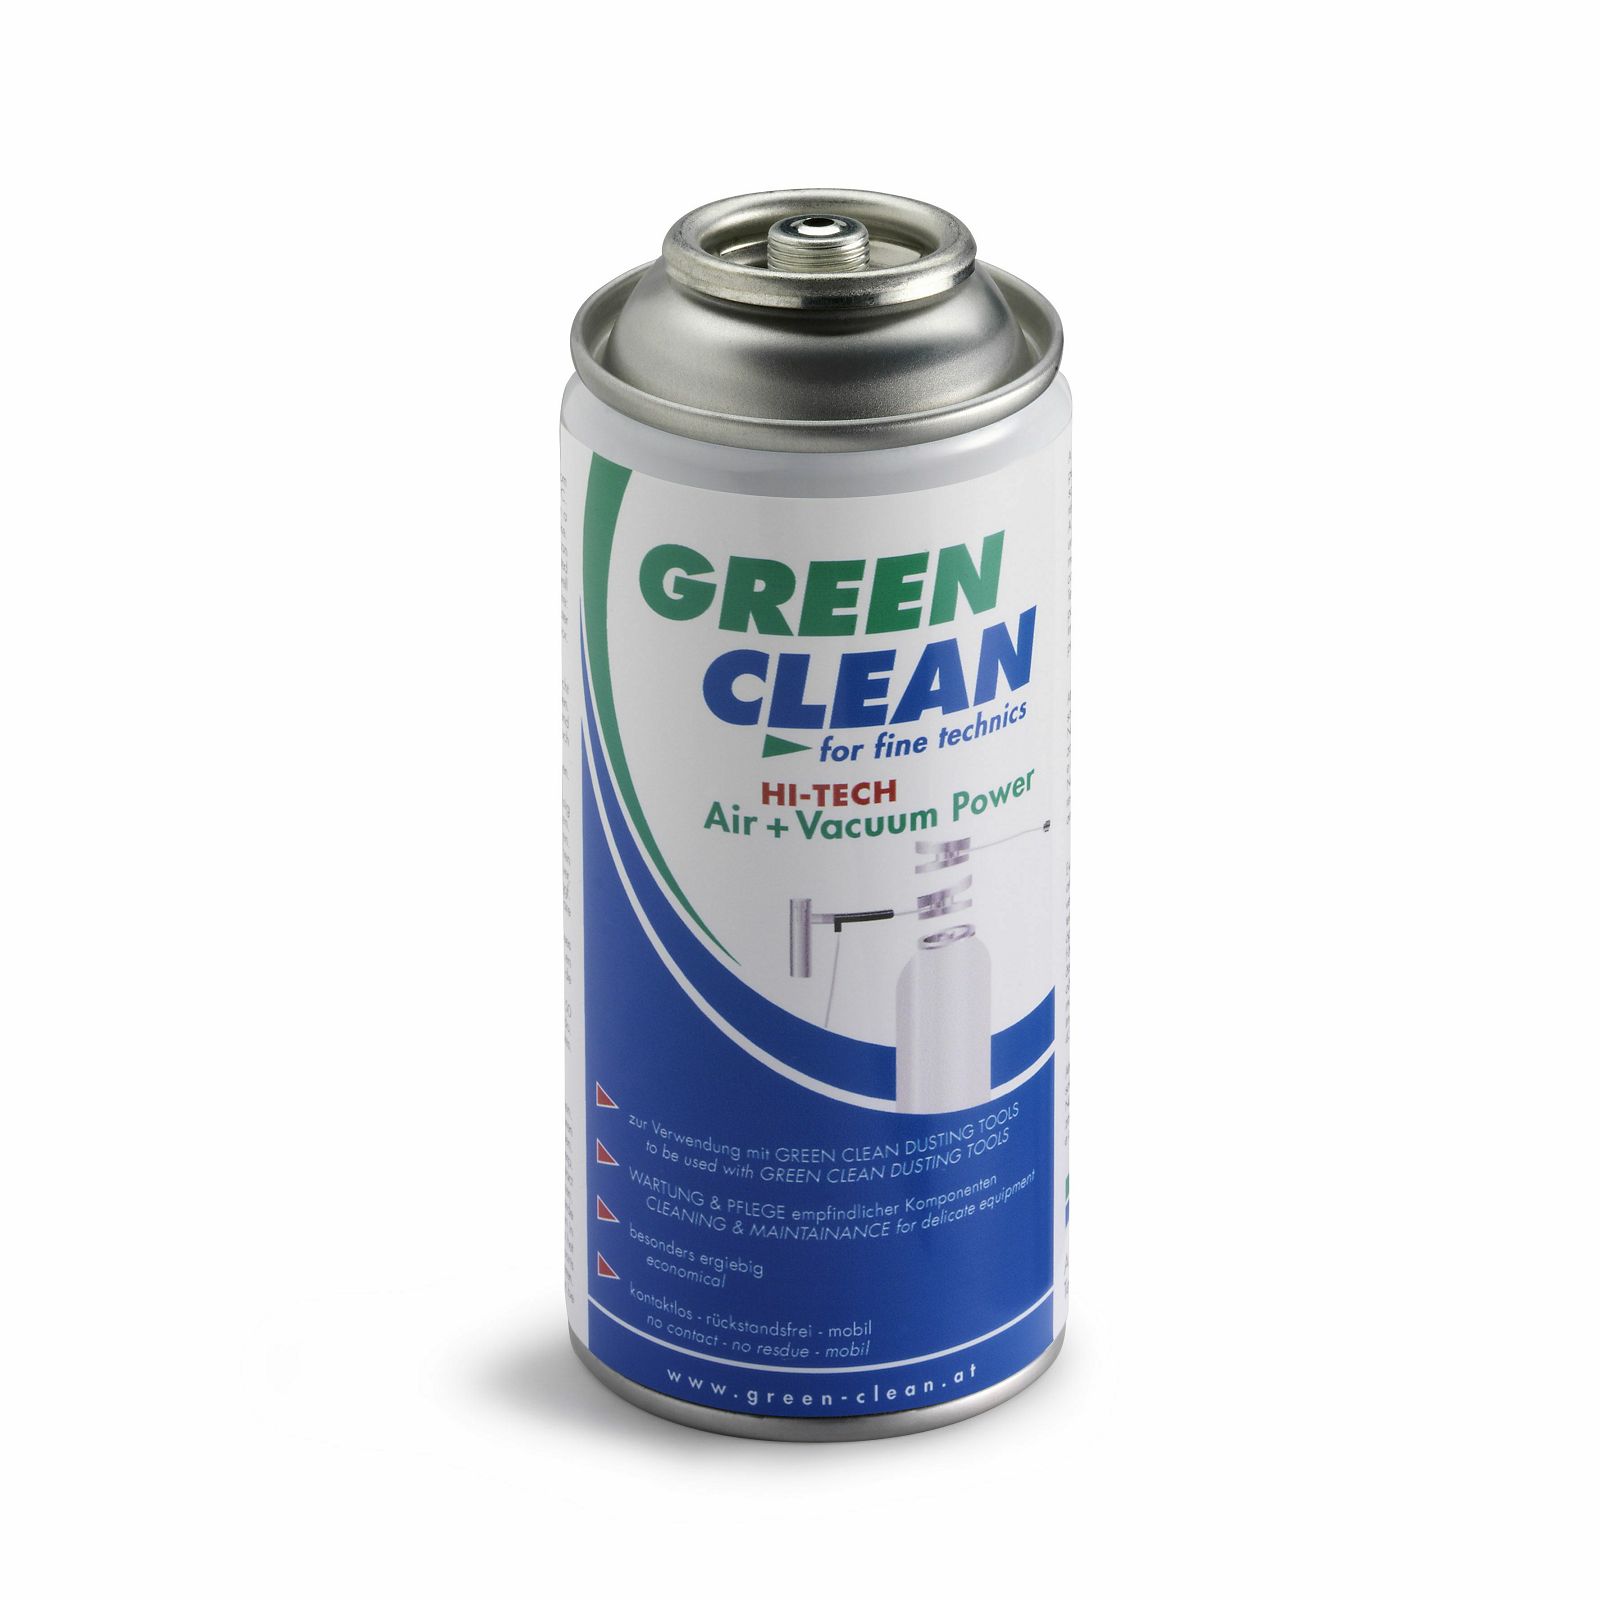 Green Clean Air + Vacuum Power HI TECH 150ml for Dusting Tools (G-2016)